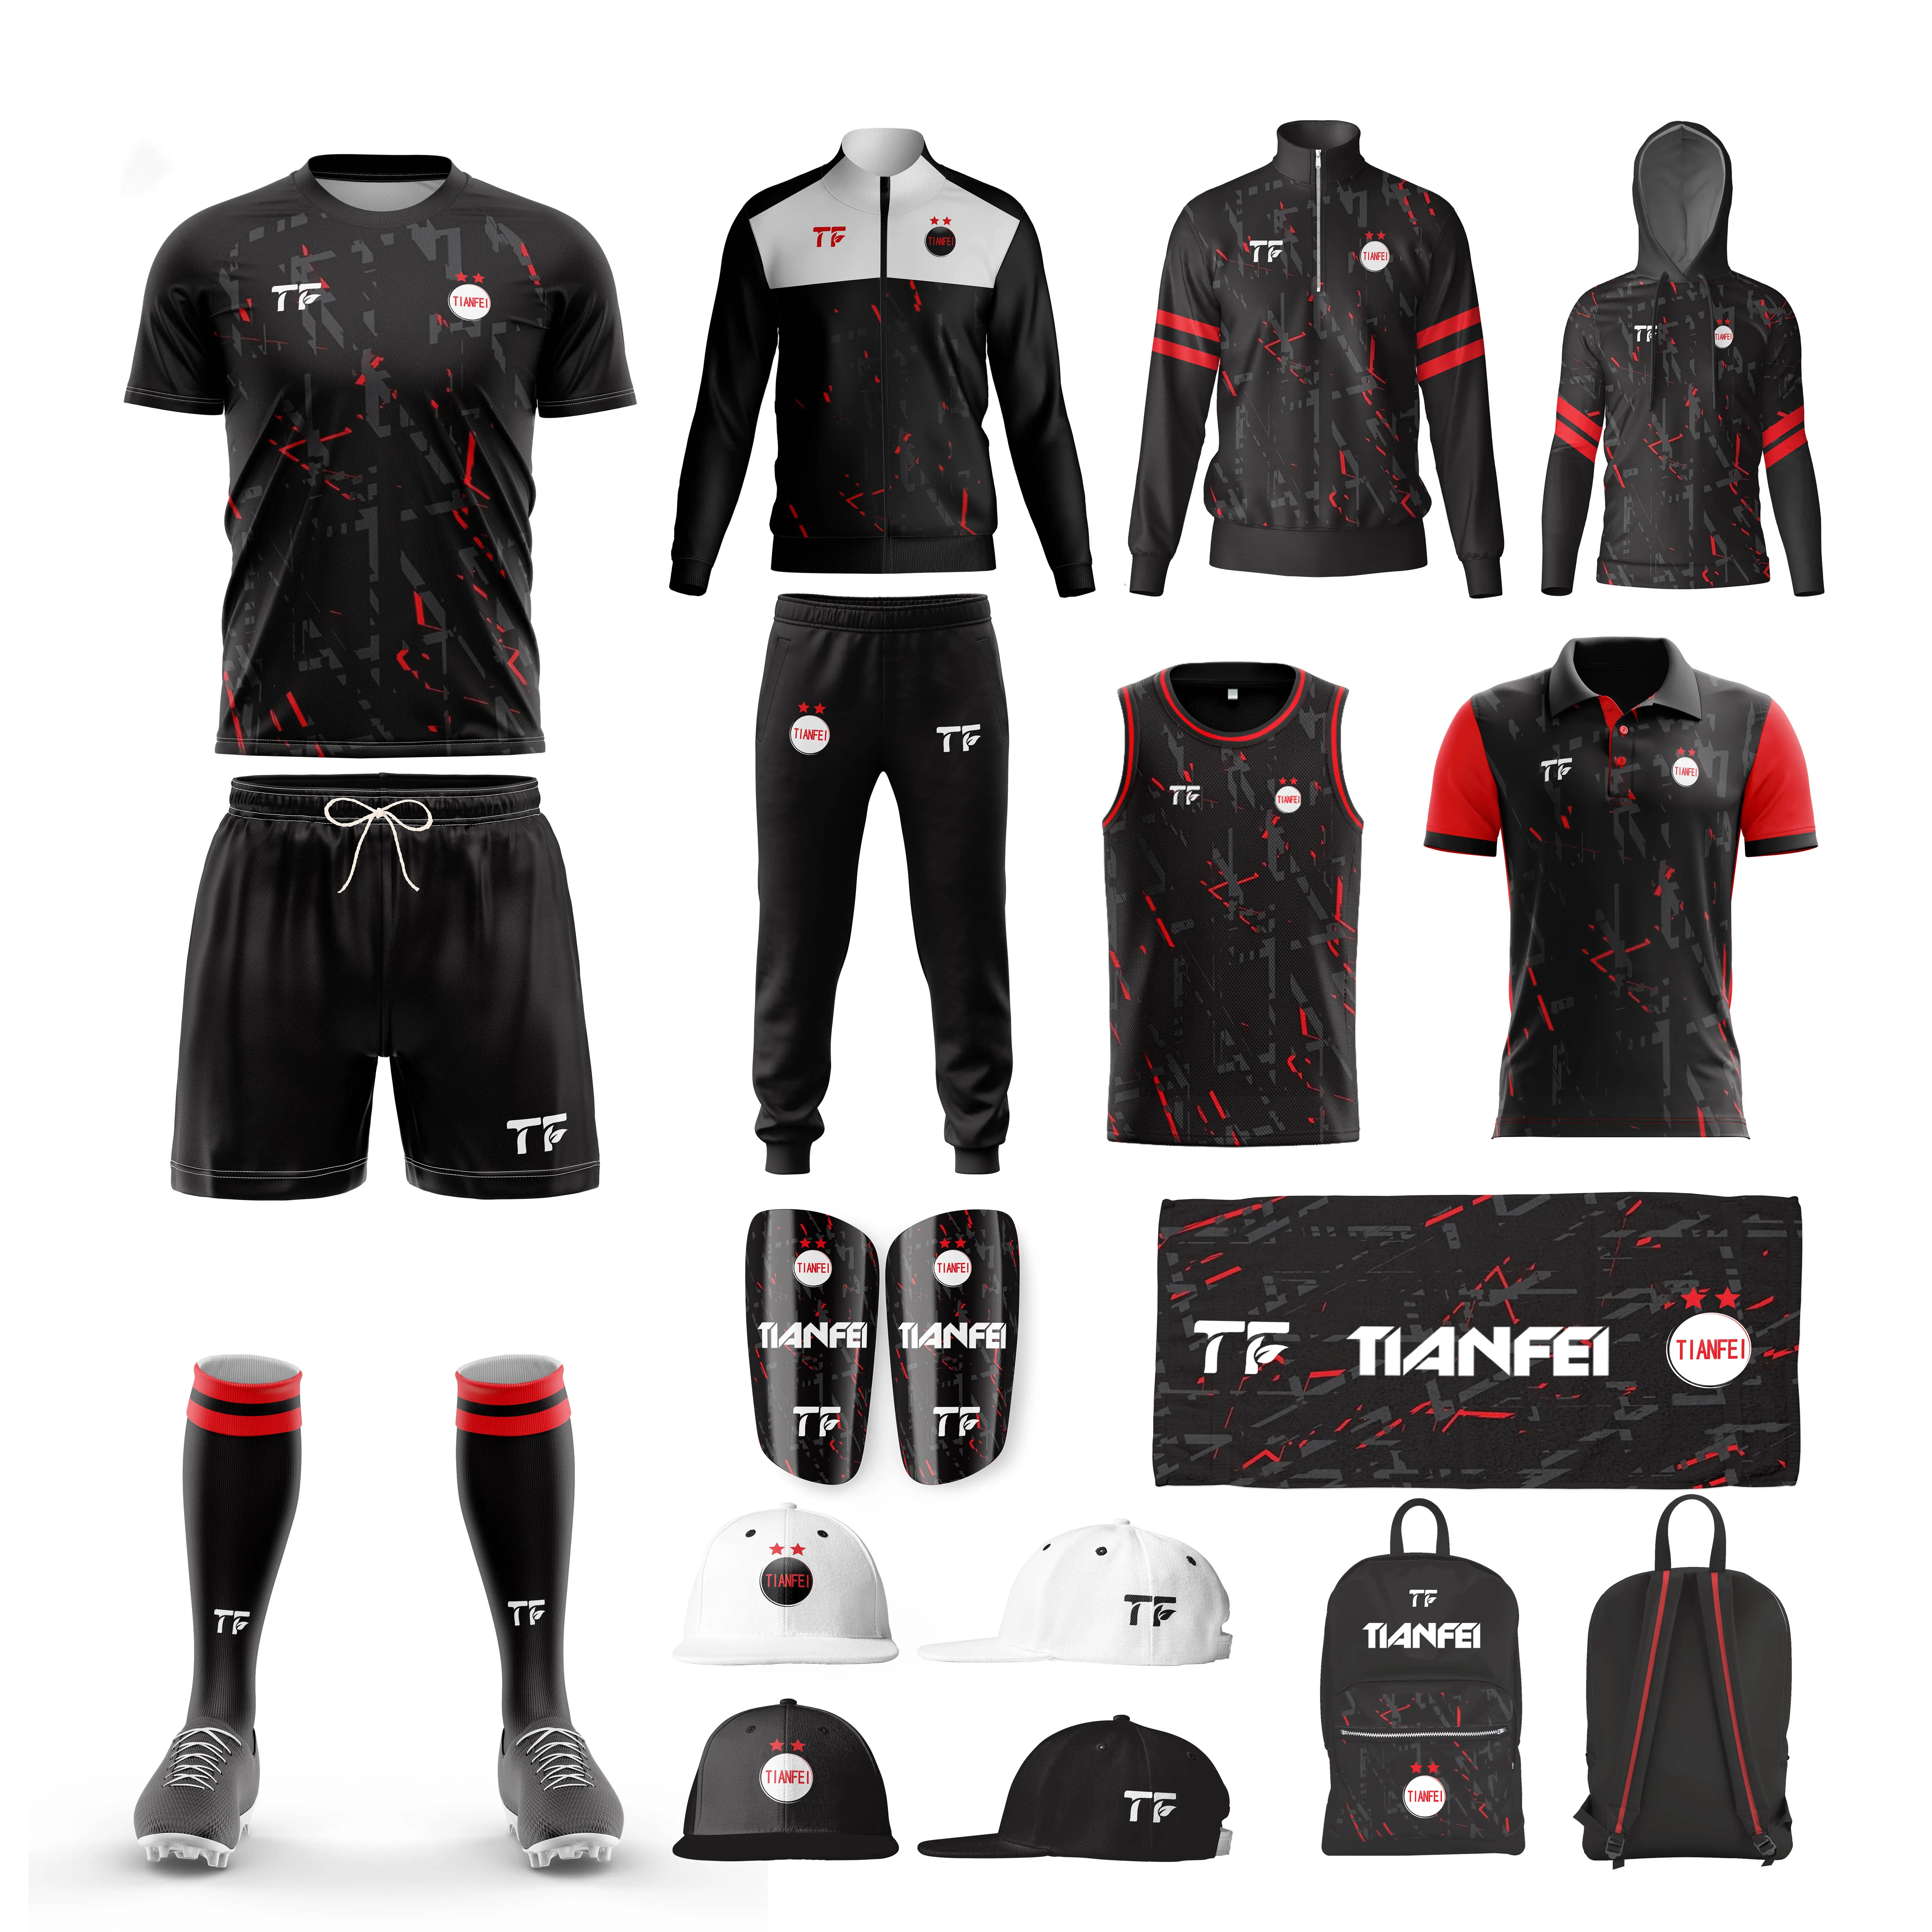 TF Customized Soccer shirt wear football kit quick drying football shirt football uniforms set sublimated black soccer jersey